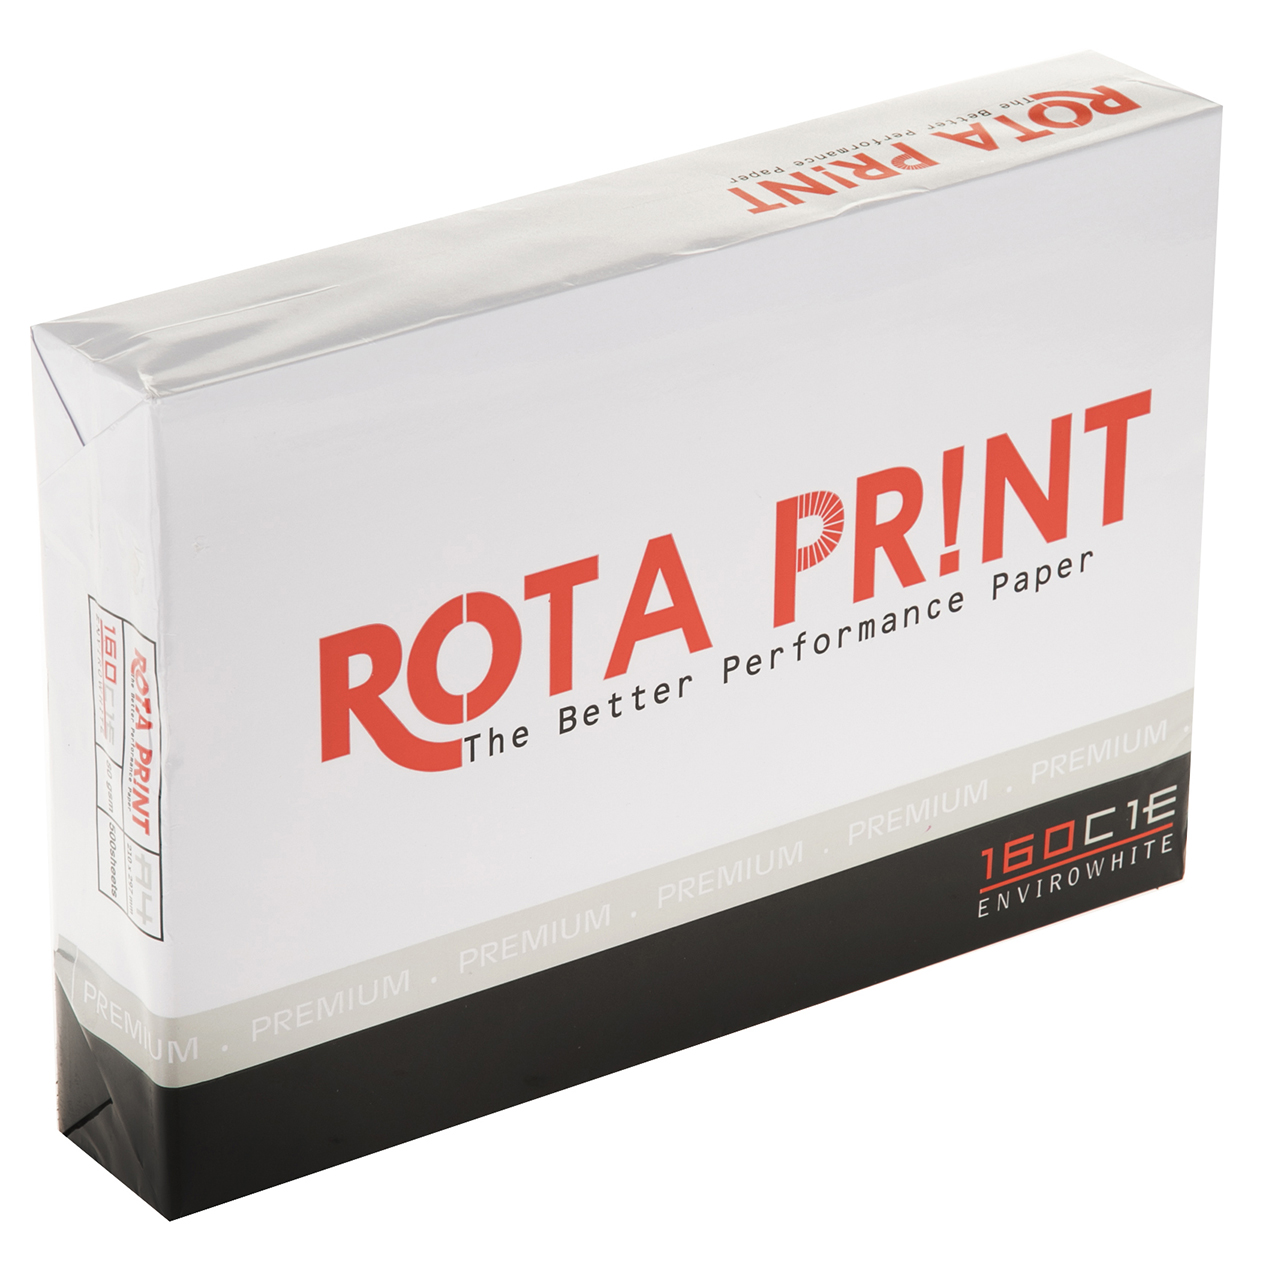 کاغذ A4 روتا پرینت مدل 160C1E بسته 500 عددی